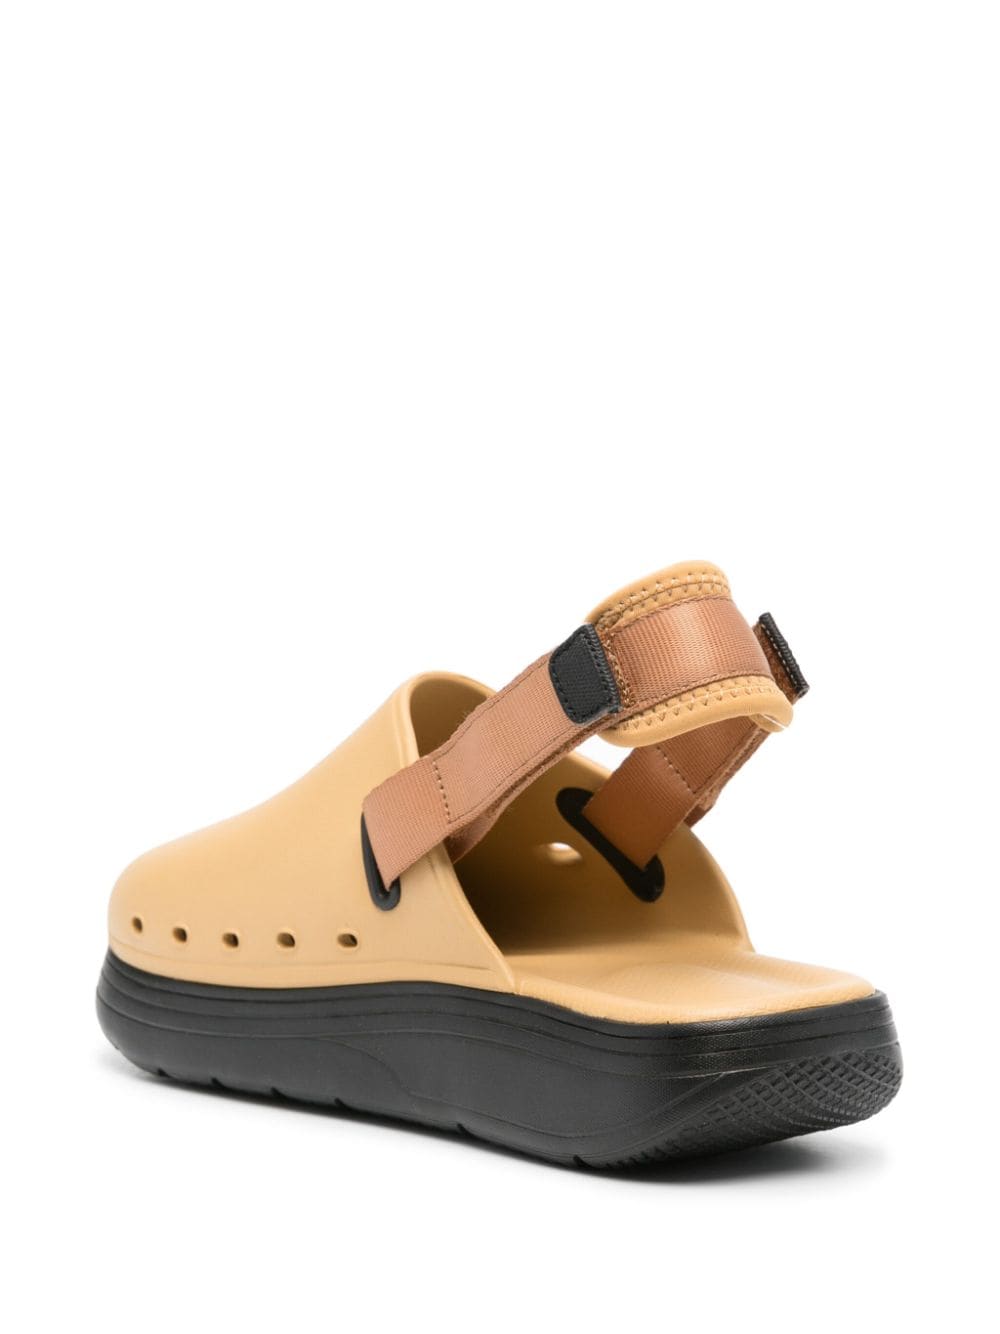 Cappo slingback sandals<BR/><BR/><BR/>